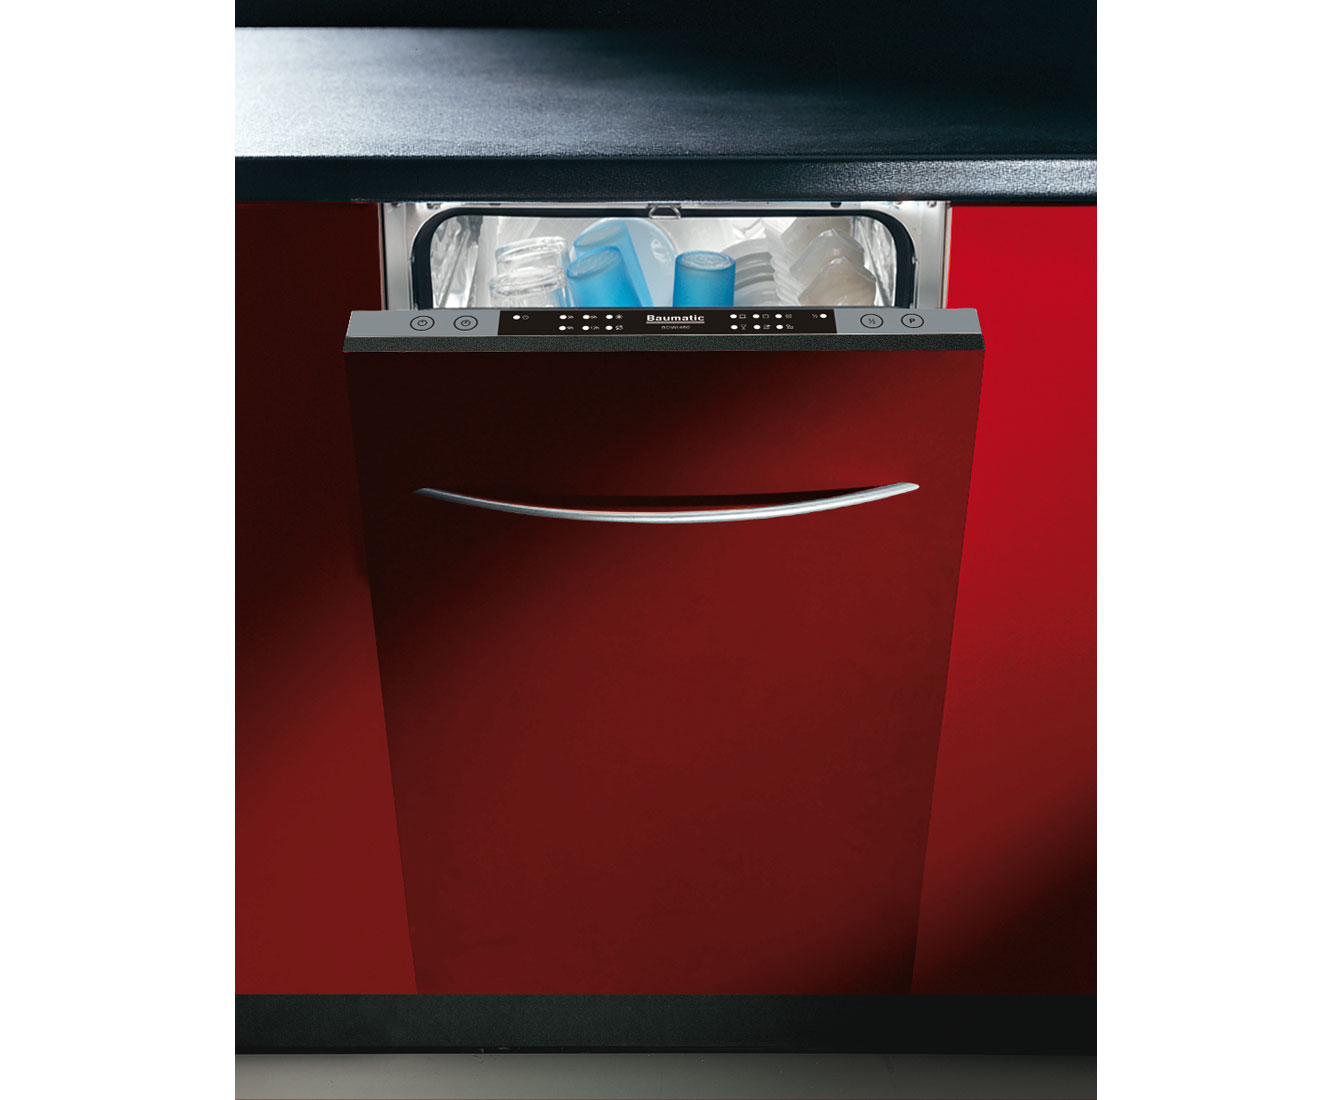 Baumatic BDWI460 Integrated Slimline Dishwasher in Silver